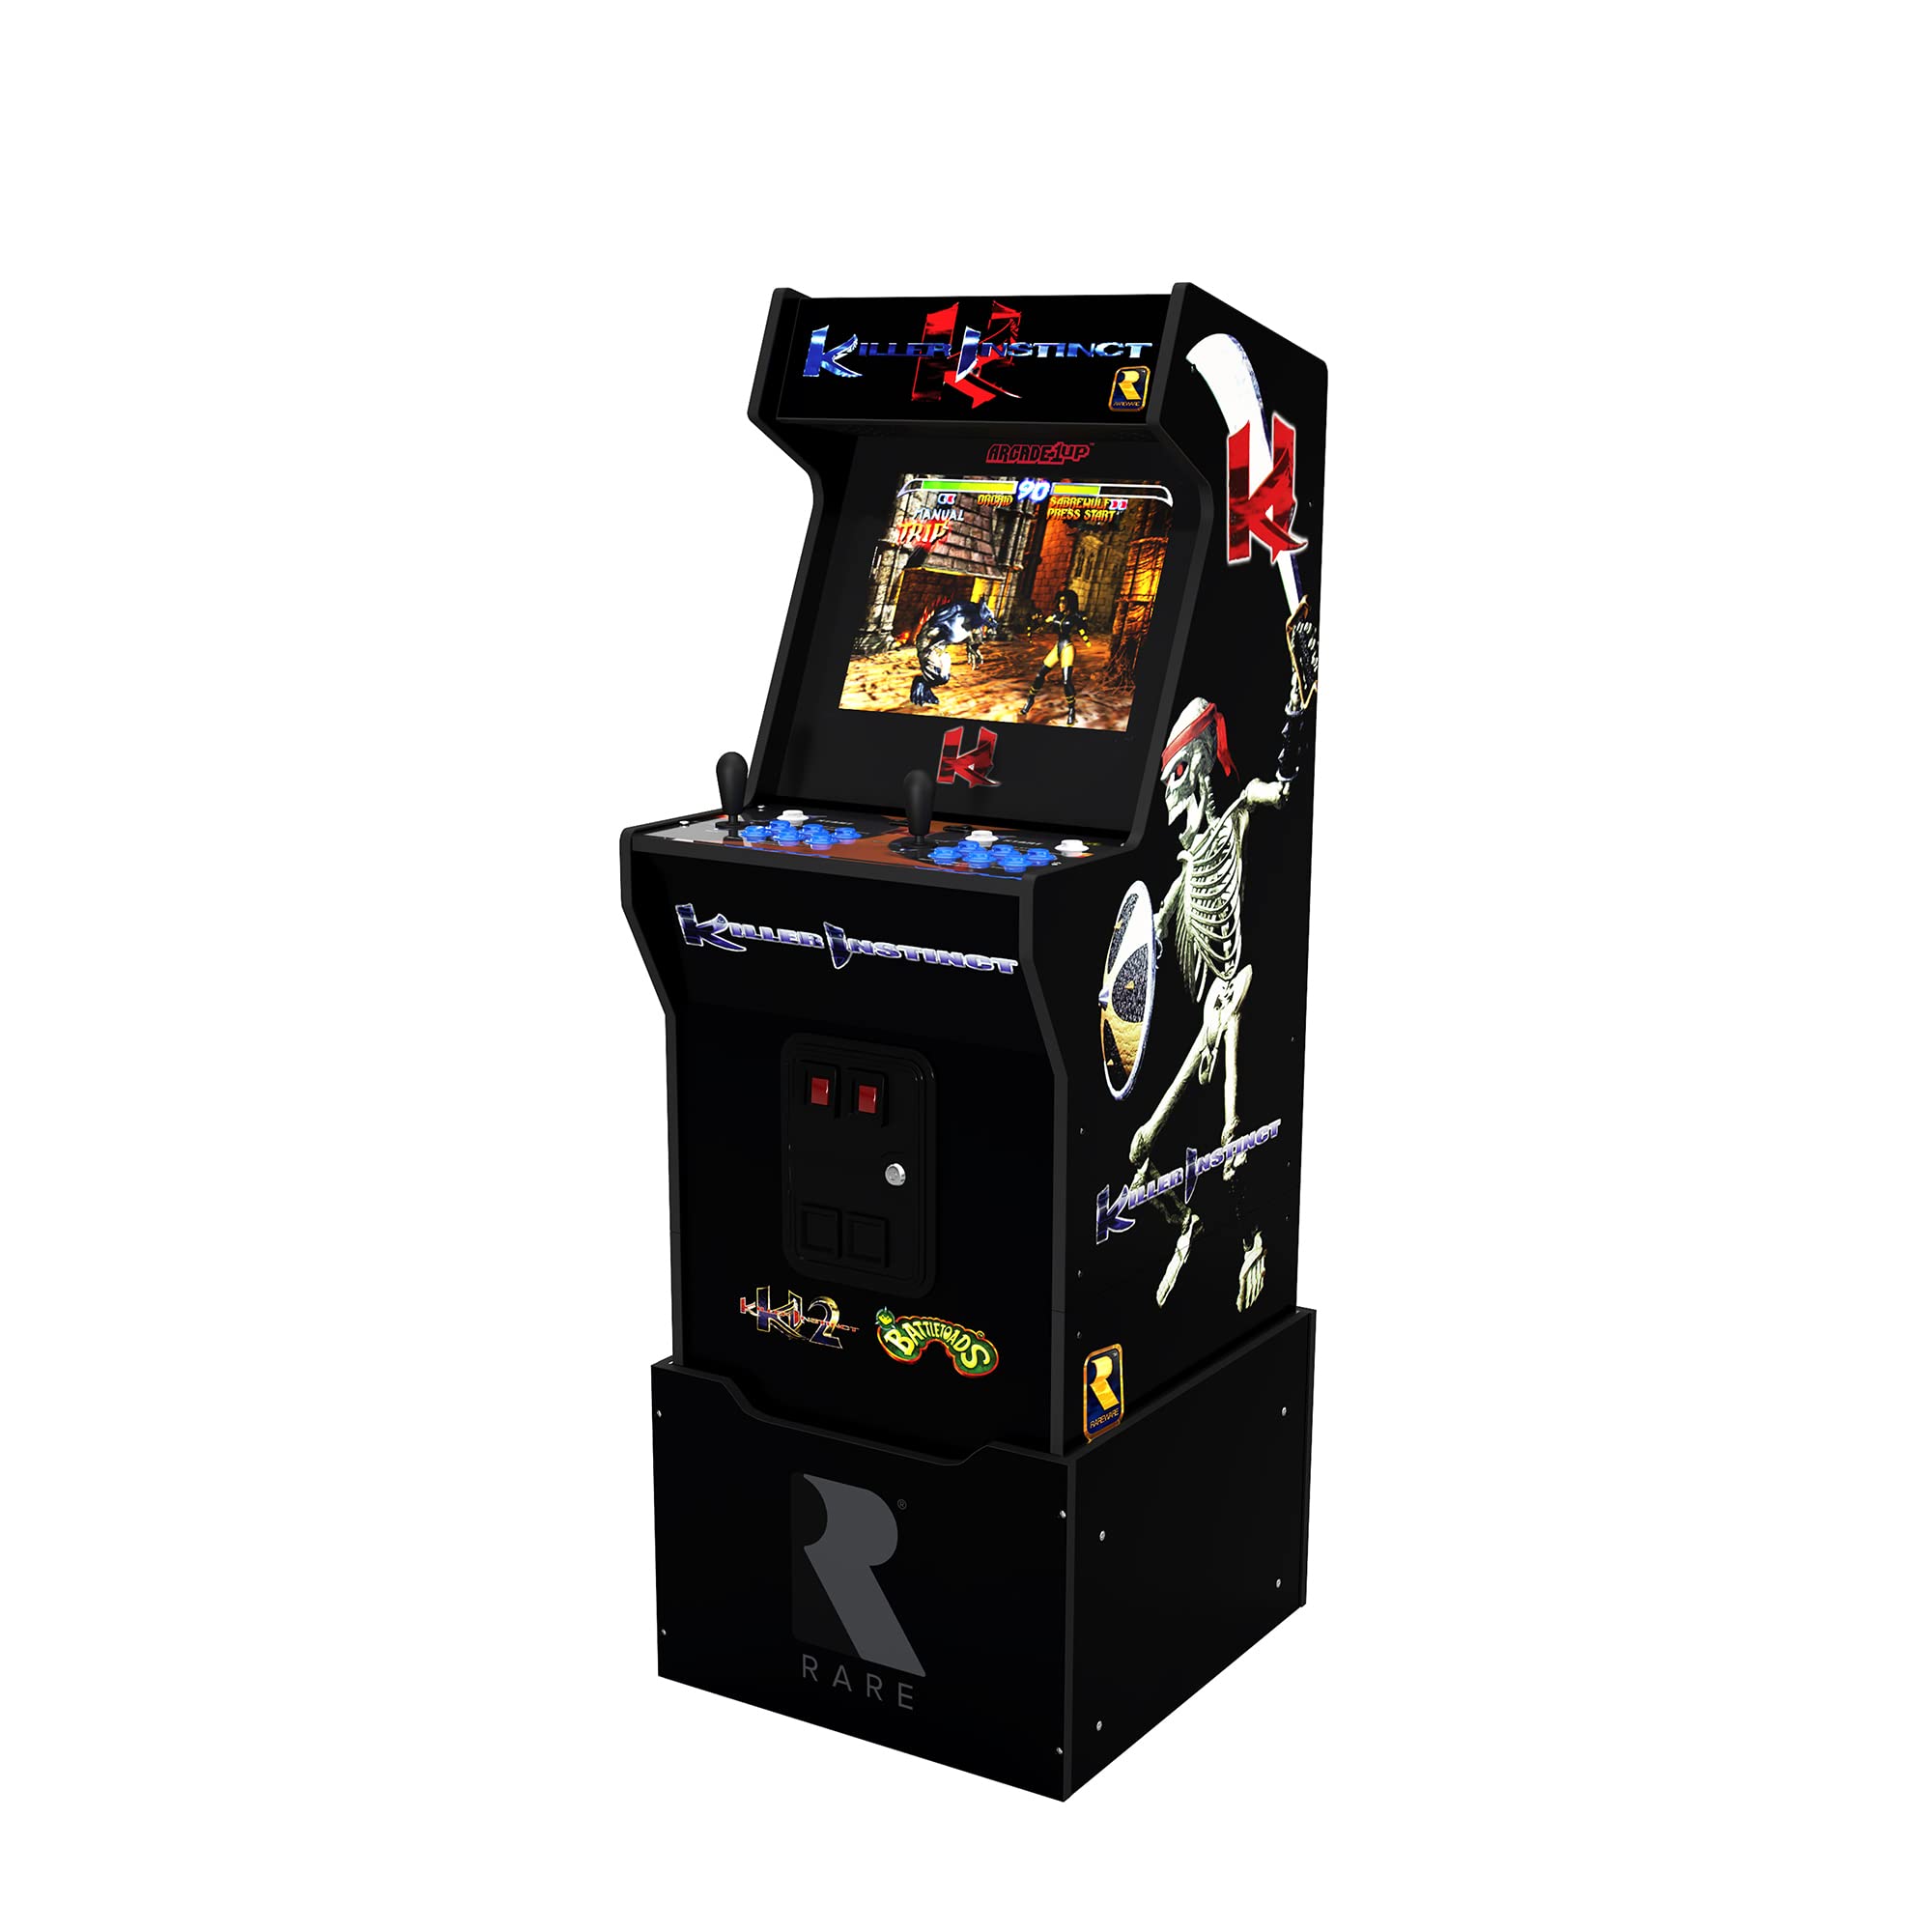 Arcade1Up Killer Instinct Arcade Machine with Riser and Stool